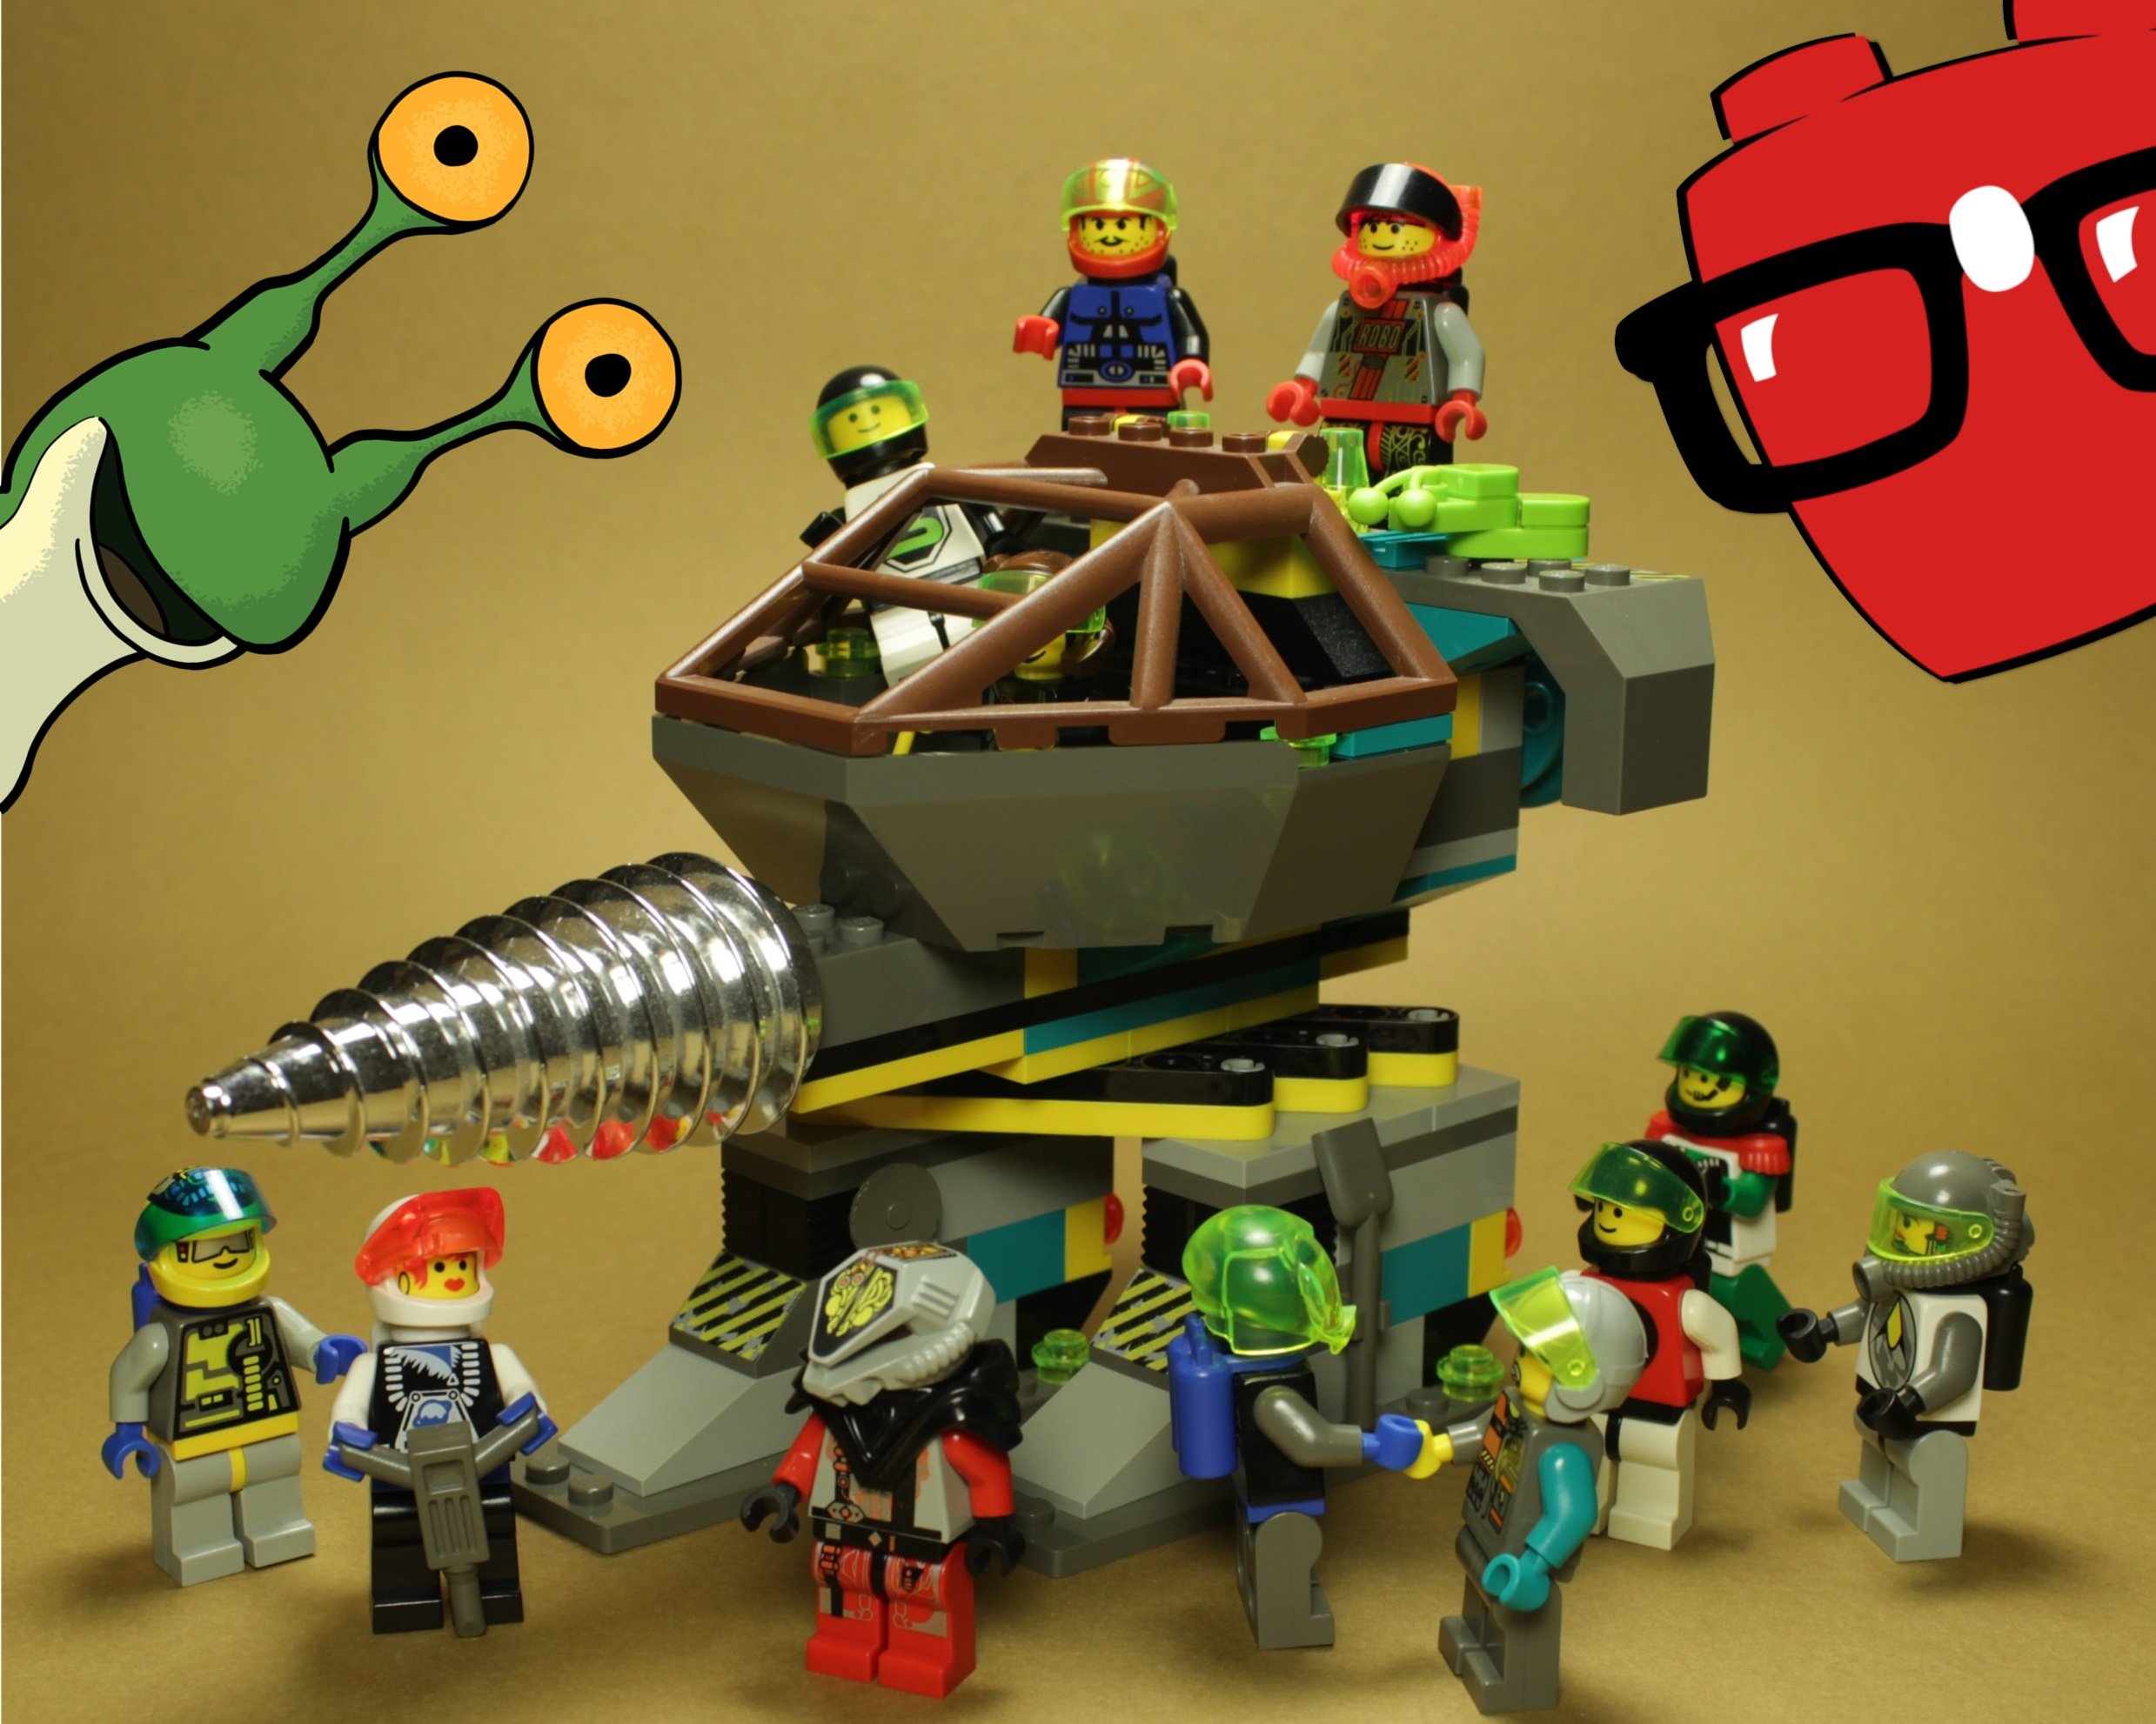 Rock Raiders Is a LEGO Space Theme - BrickNerd - All things LEGO